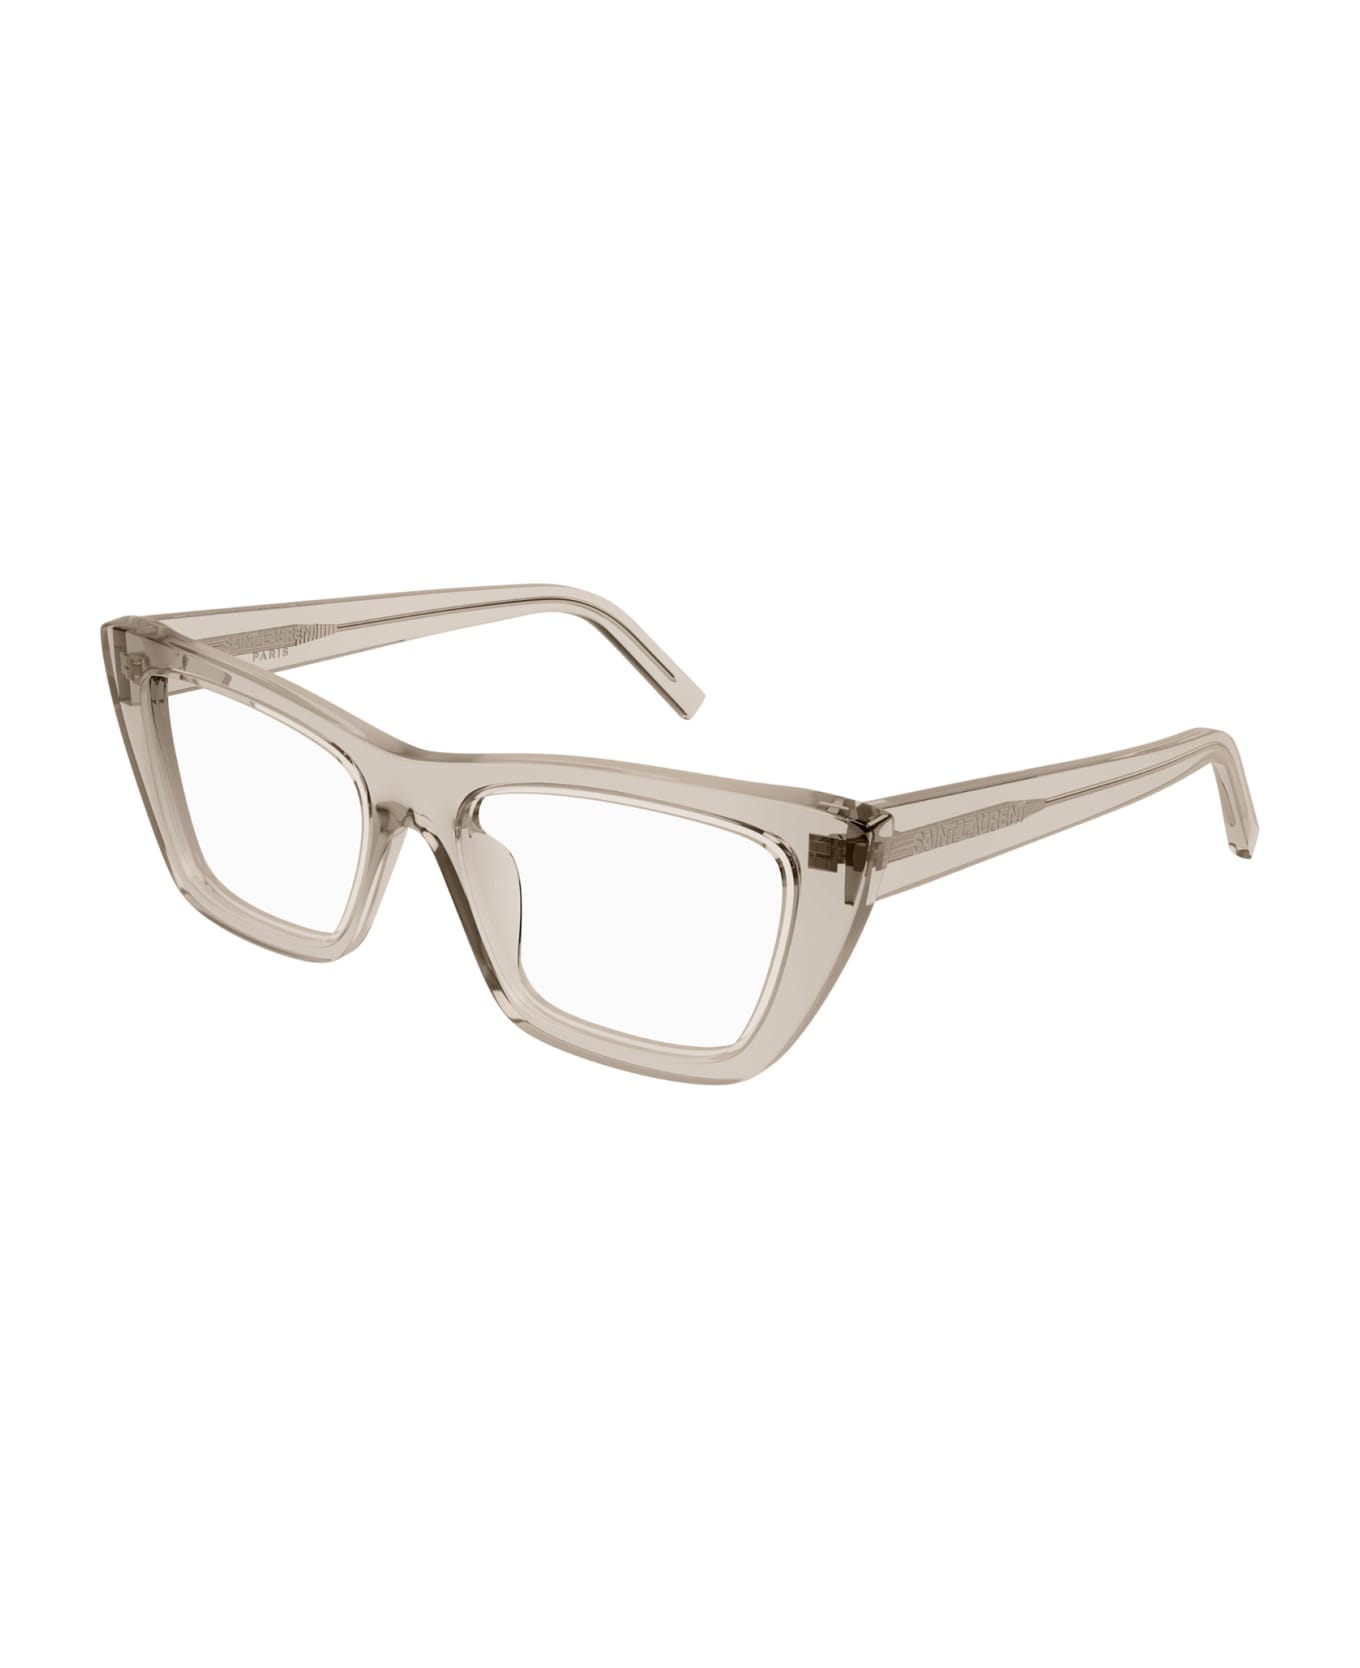 Saint Laurent Eyewear SL 276 MICA OPT Eyewear - Beige Beige Transpare